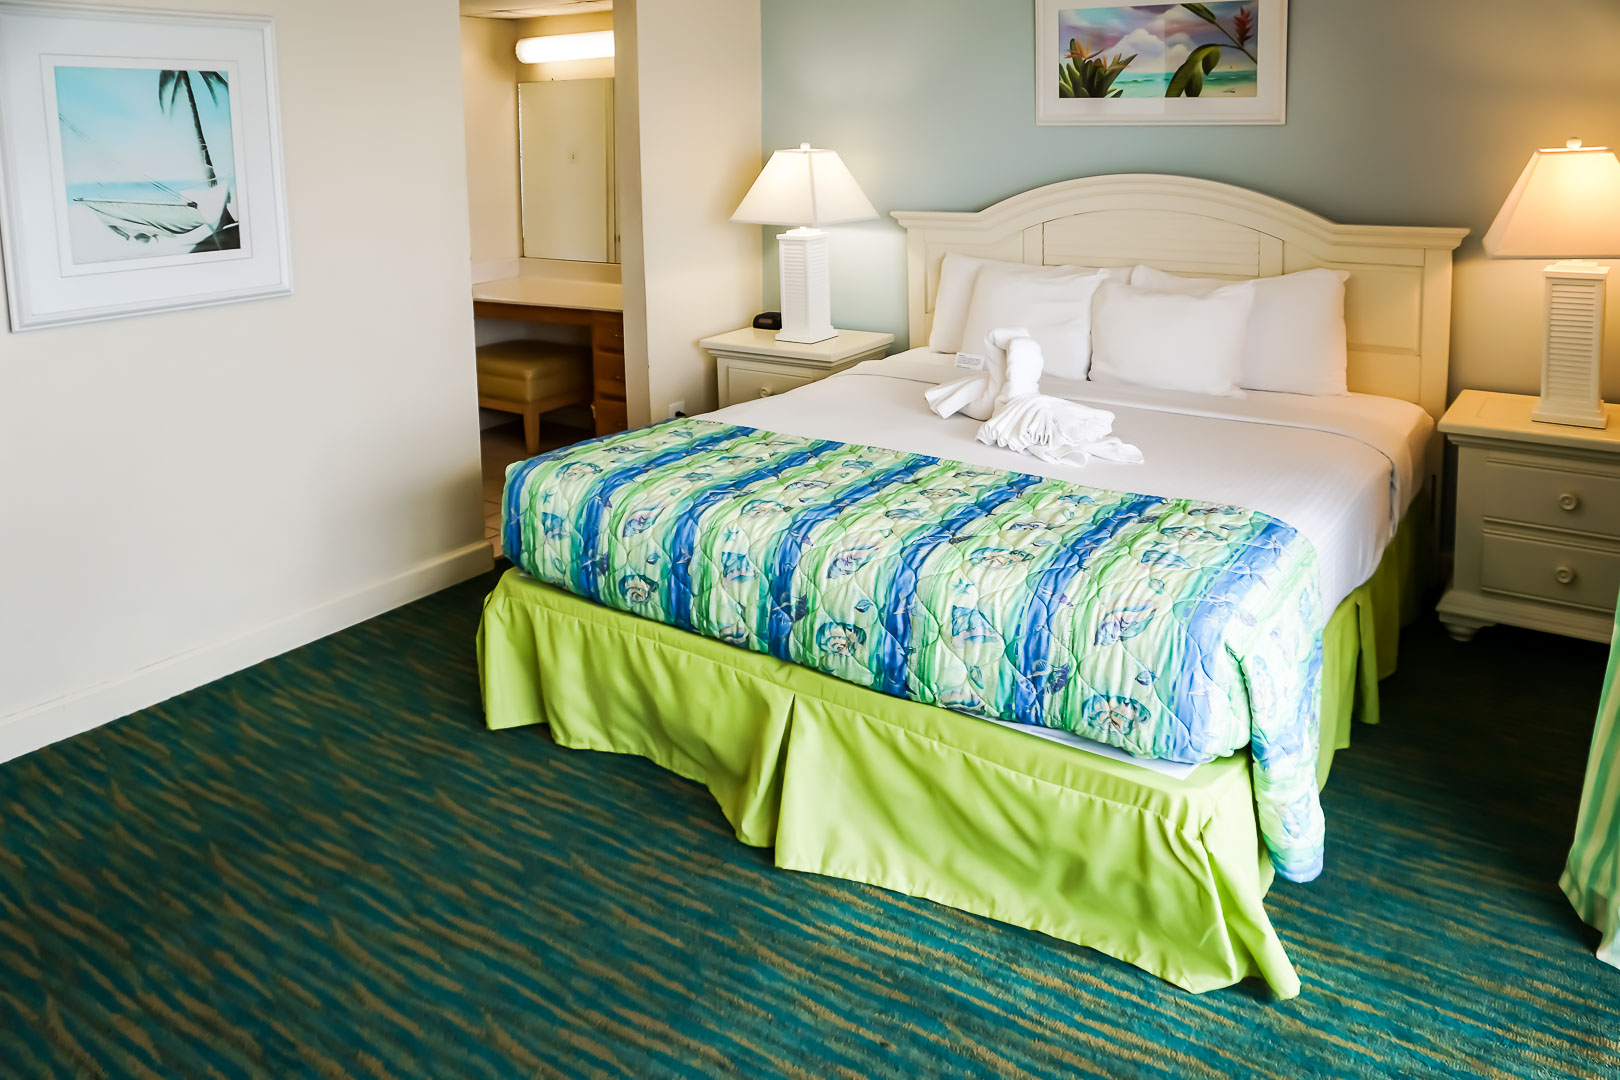 A vibrant master bedroom at VRI's Landmark Holiday Beach Resort in Panama City, Florida.